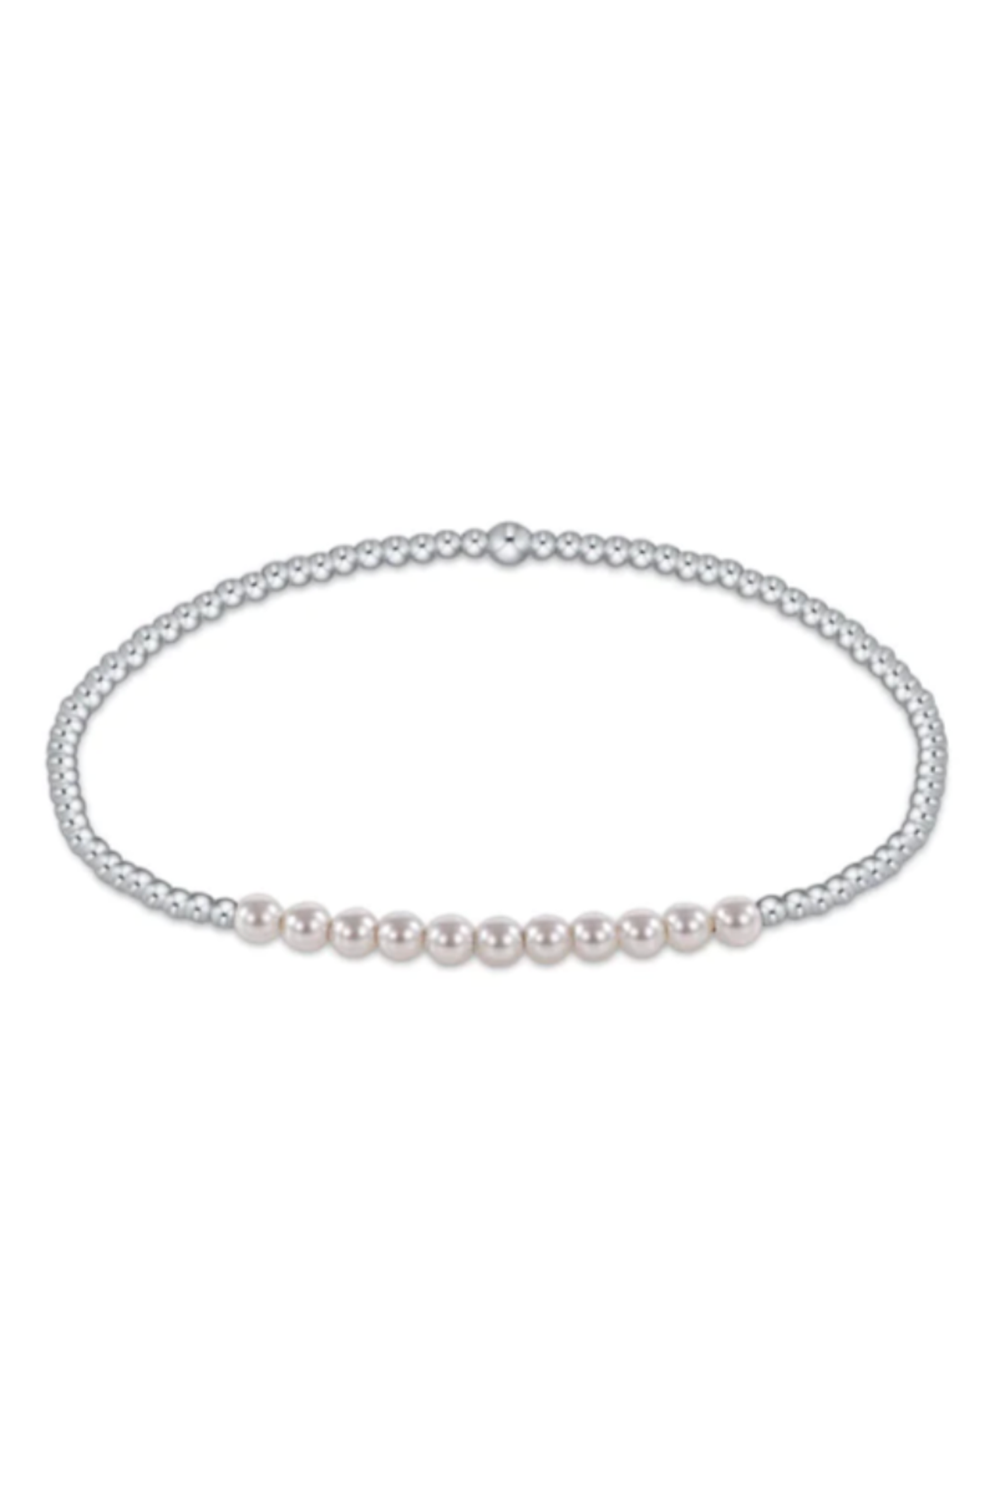 EN Classic Beaded Bliss Bracelet - Mixed Sterling + Pearl